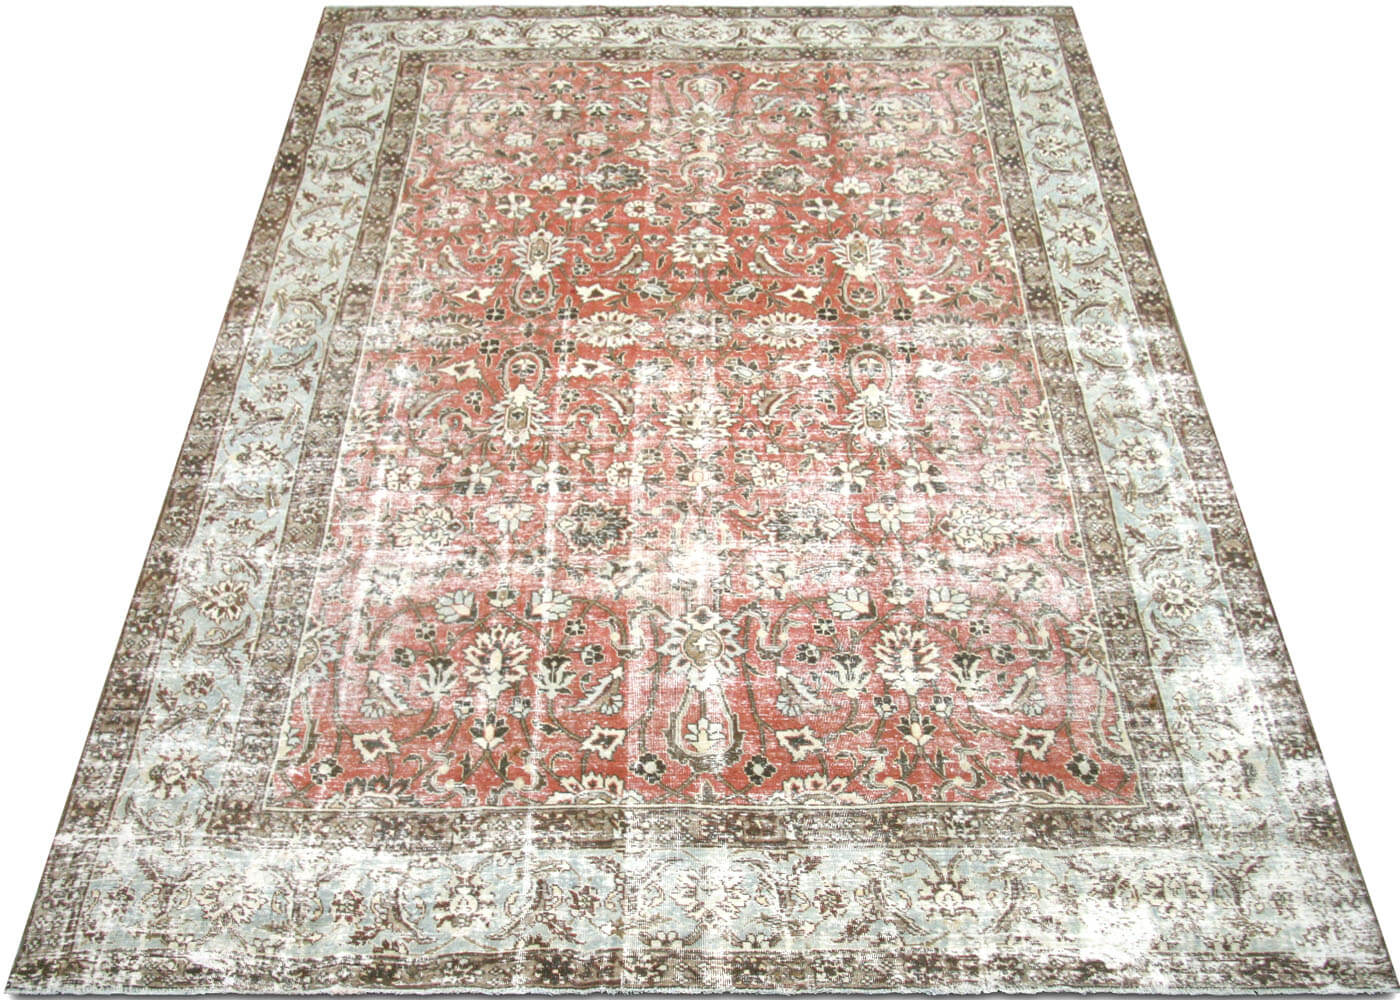 Semi Antique Persian Tabriz Rug - 7'9" x 11'4"